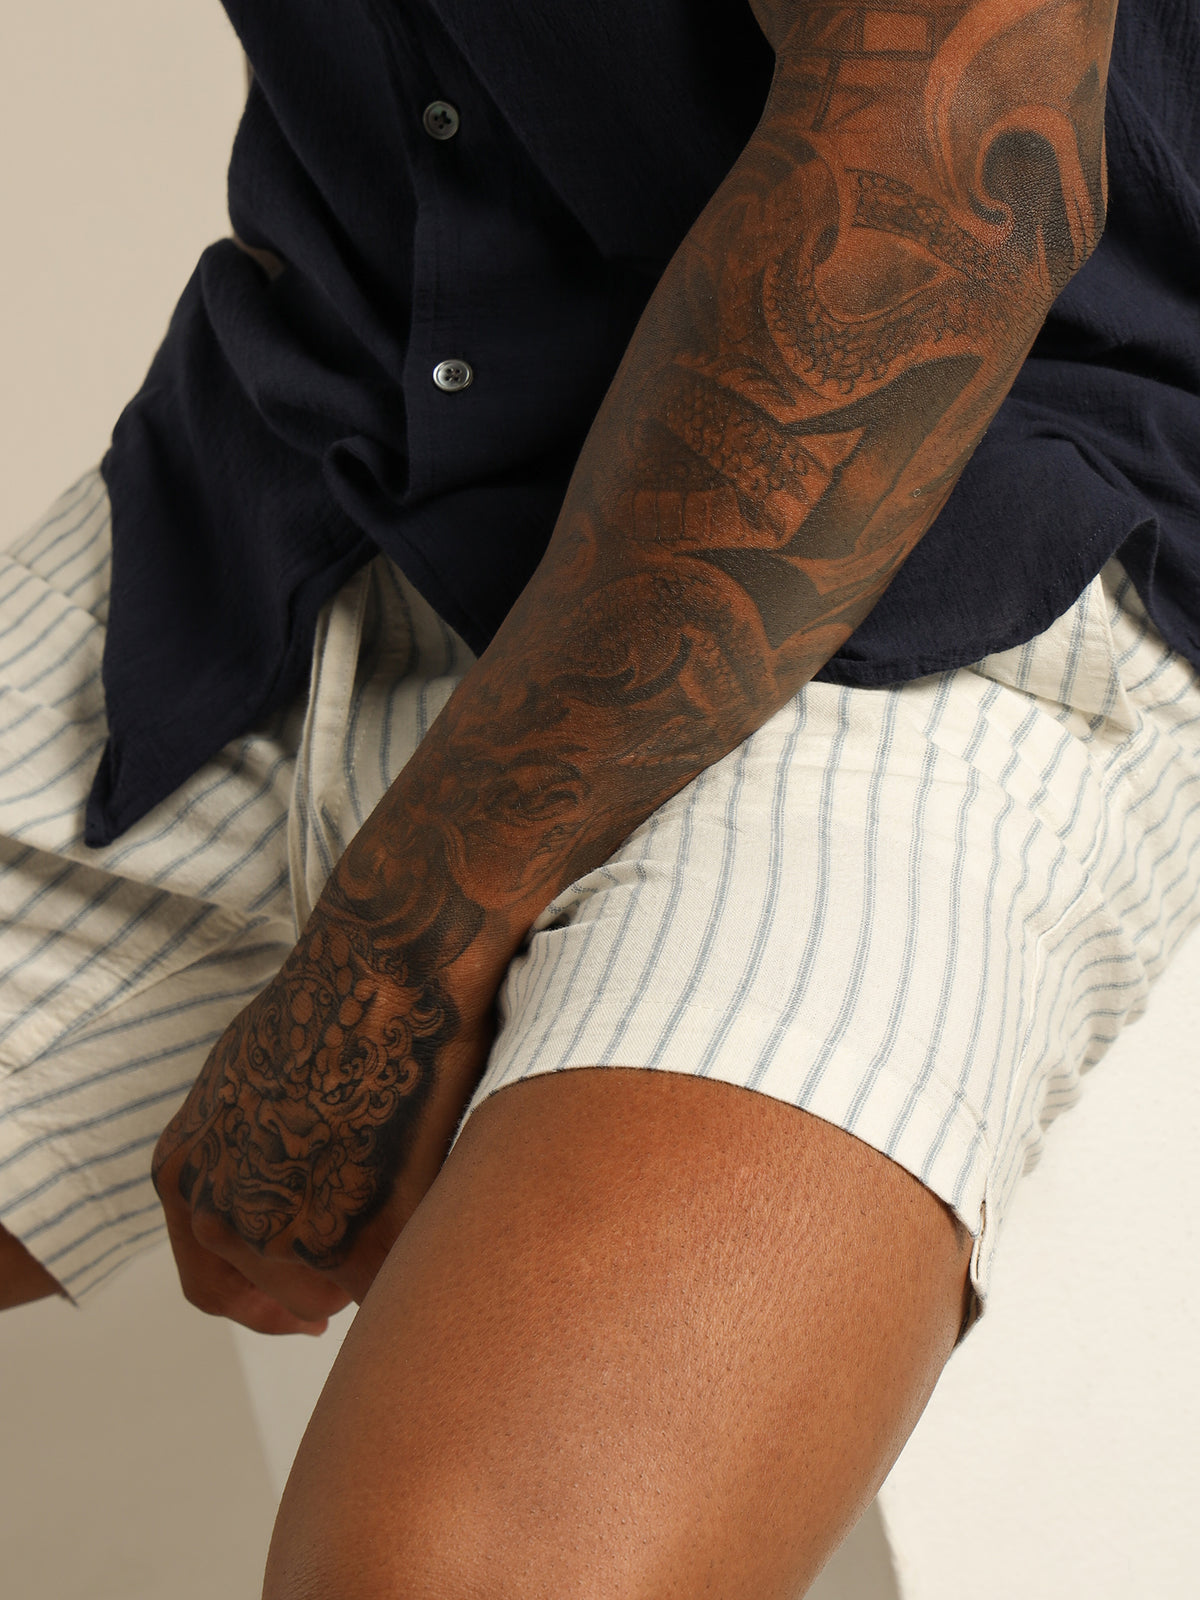 Riviera Linen Stripe Shorts in Natural